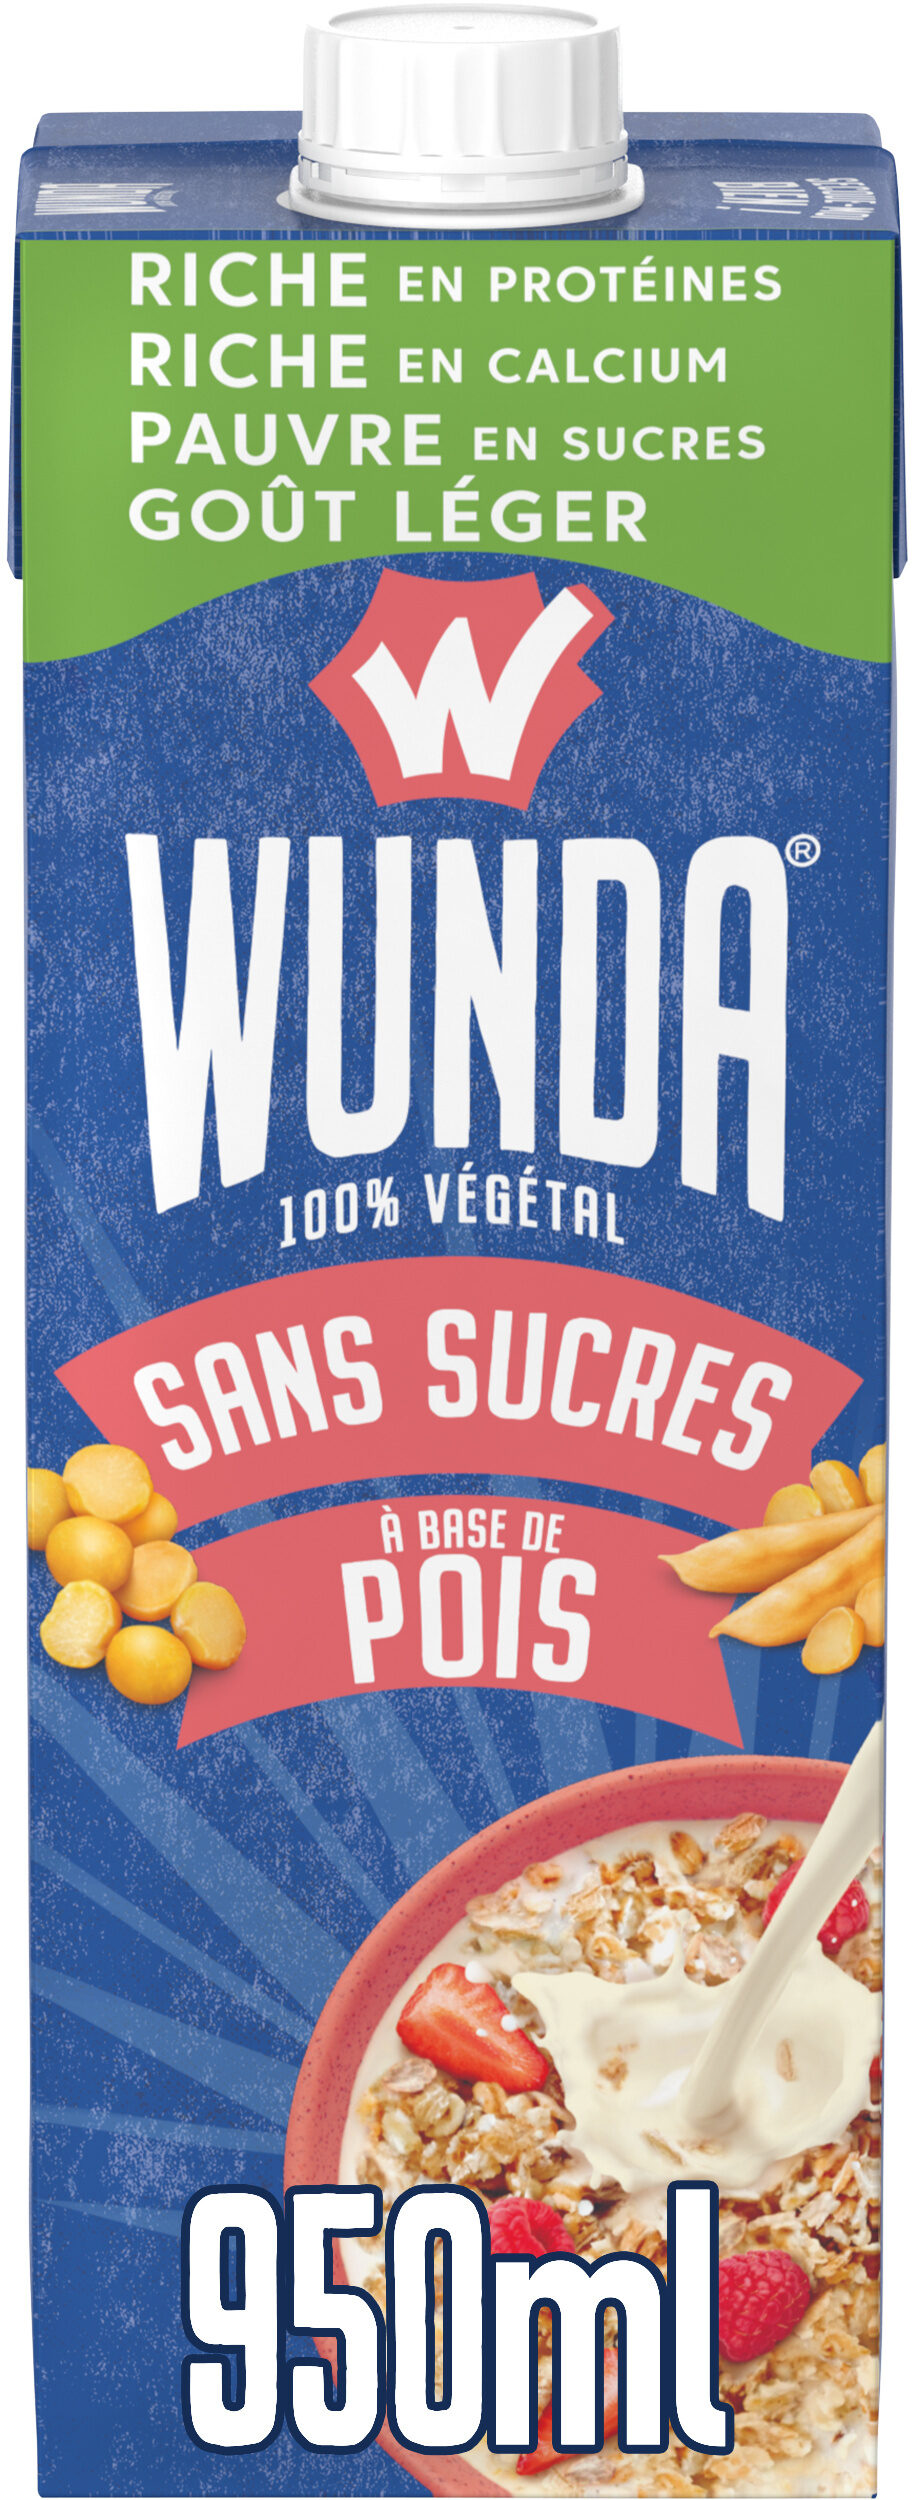 WUNDA Sans sucres 950ml - Produit